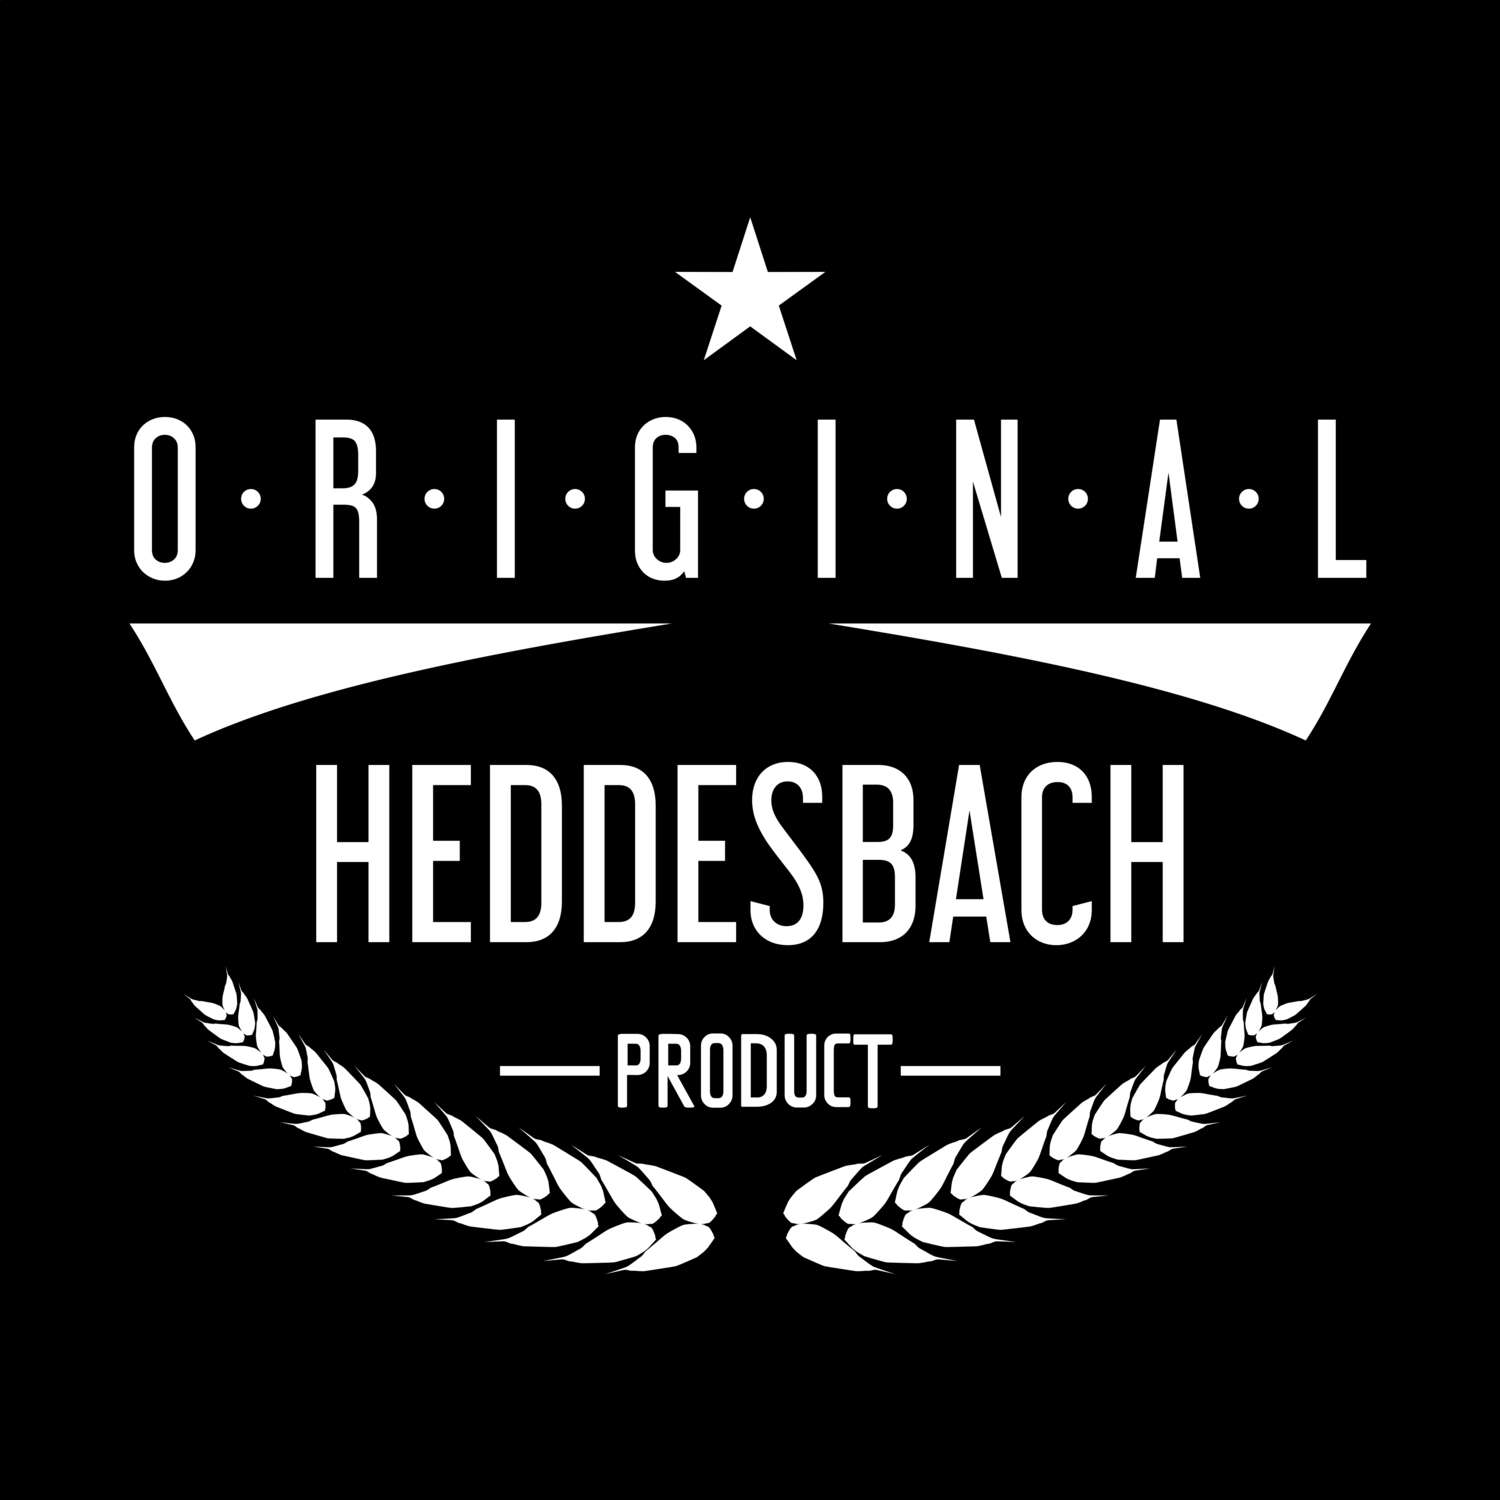 Heddesbach T-Shirt »Original Product«